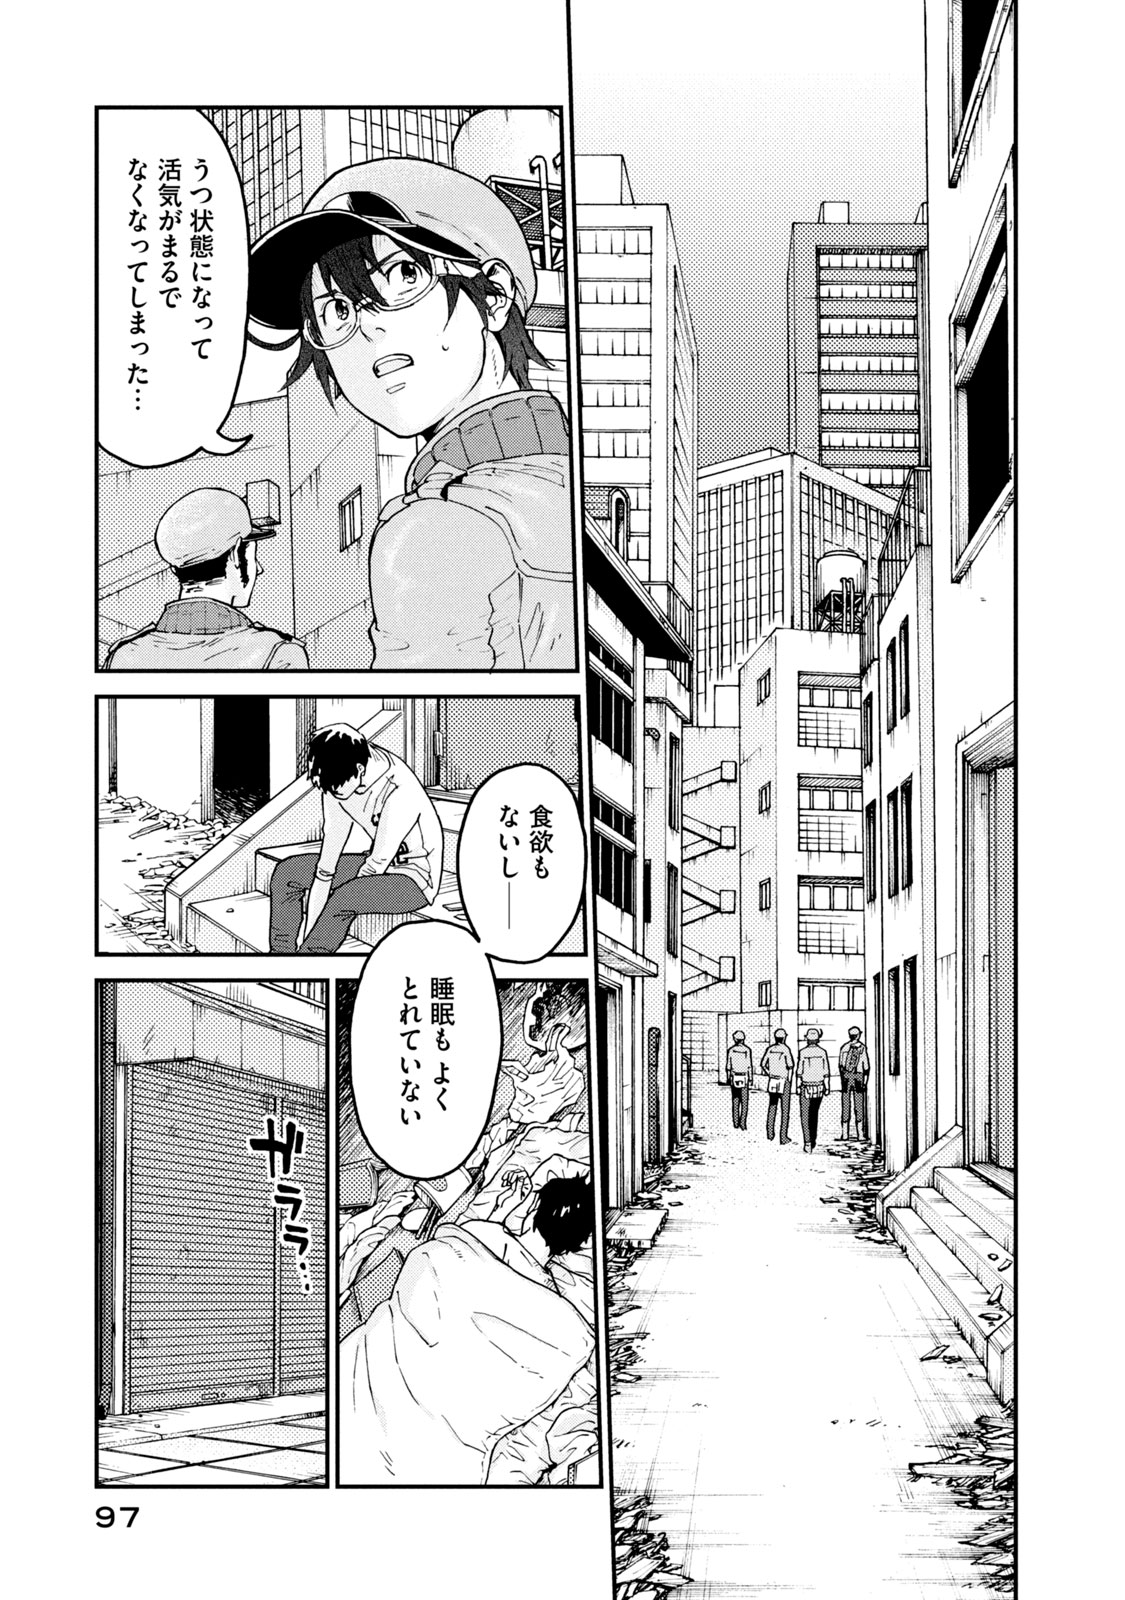 Hataraku Saibou BLACK - Chapter 35 - Page 5